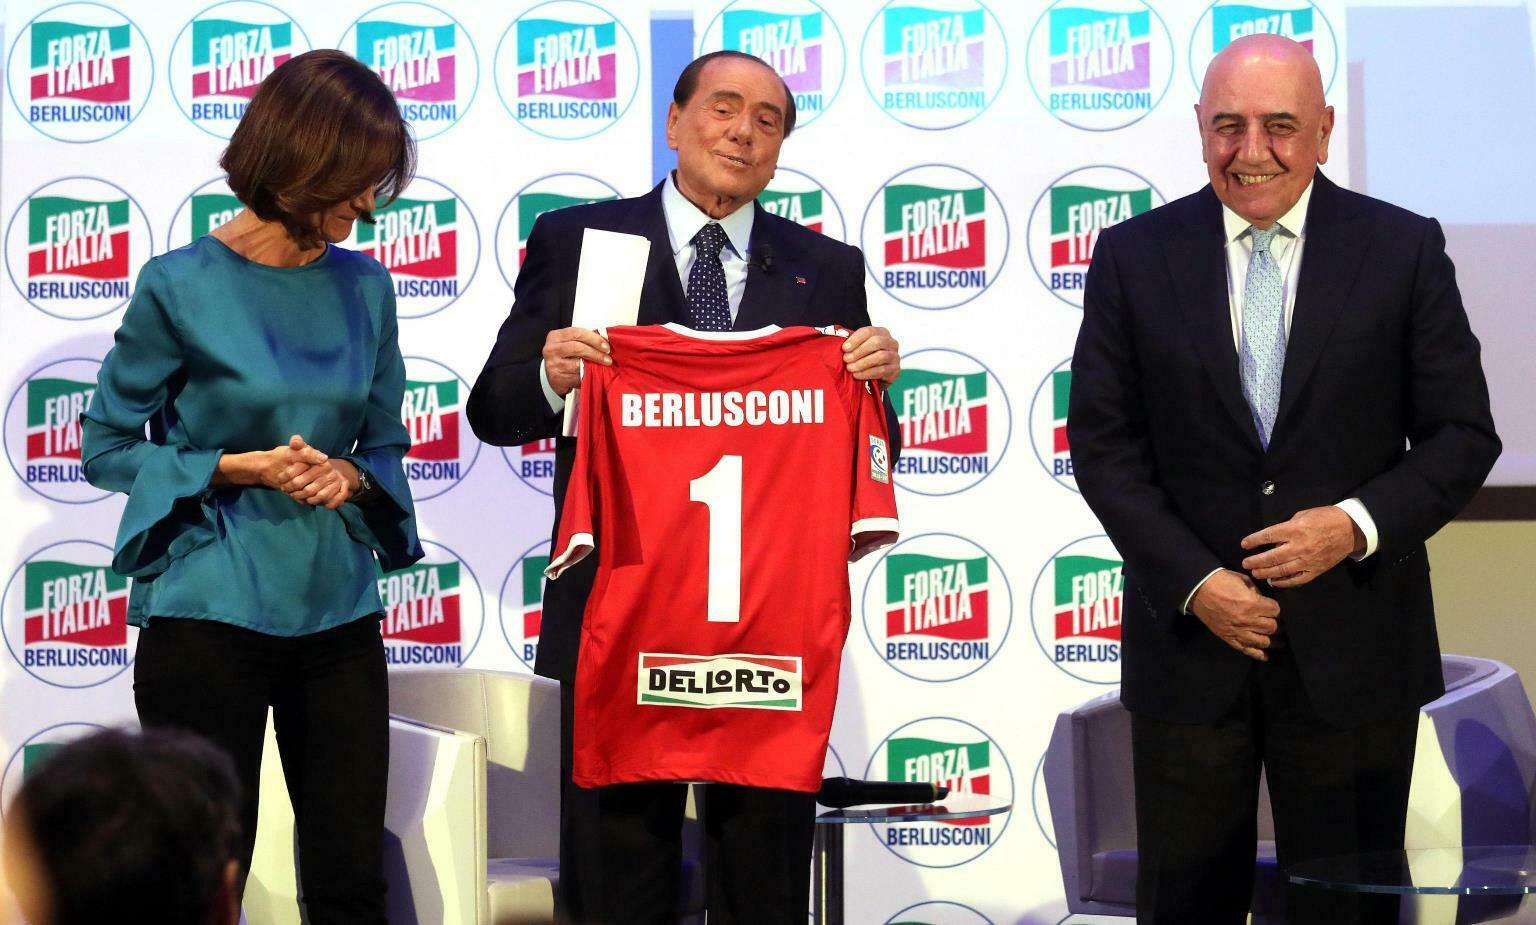 Berlusconi Galliani Monza